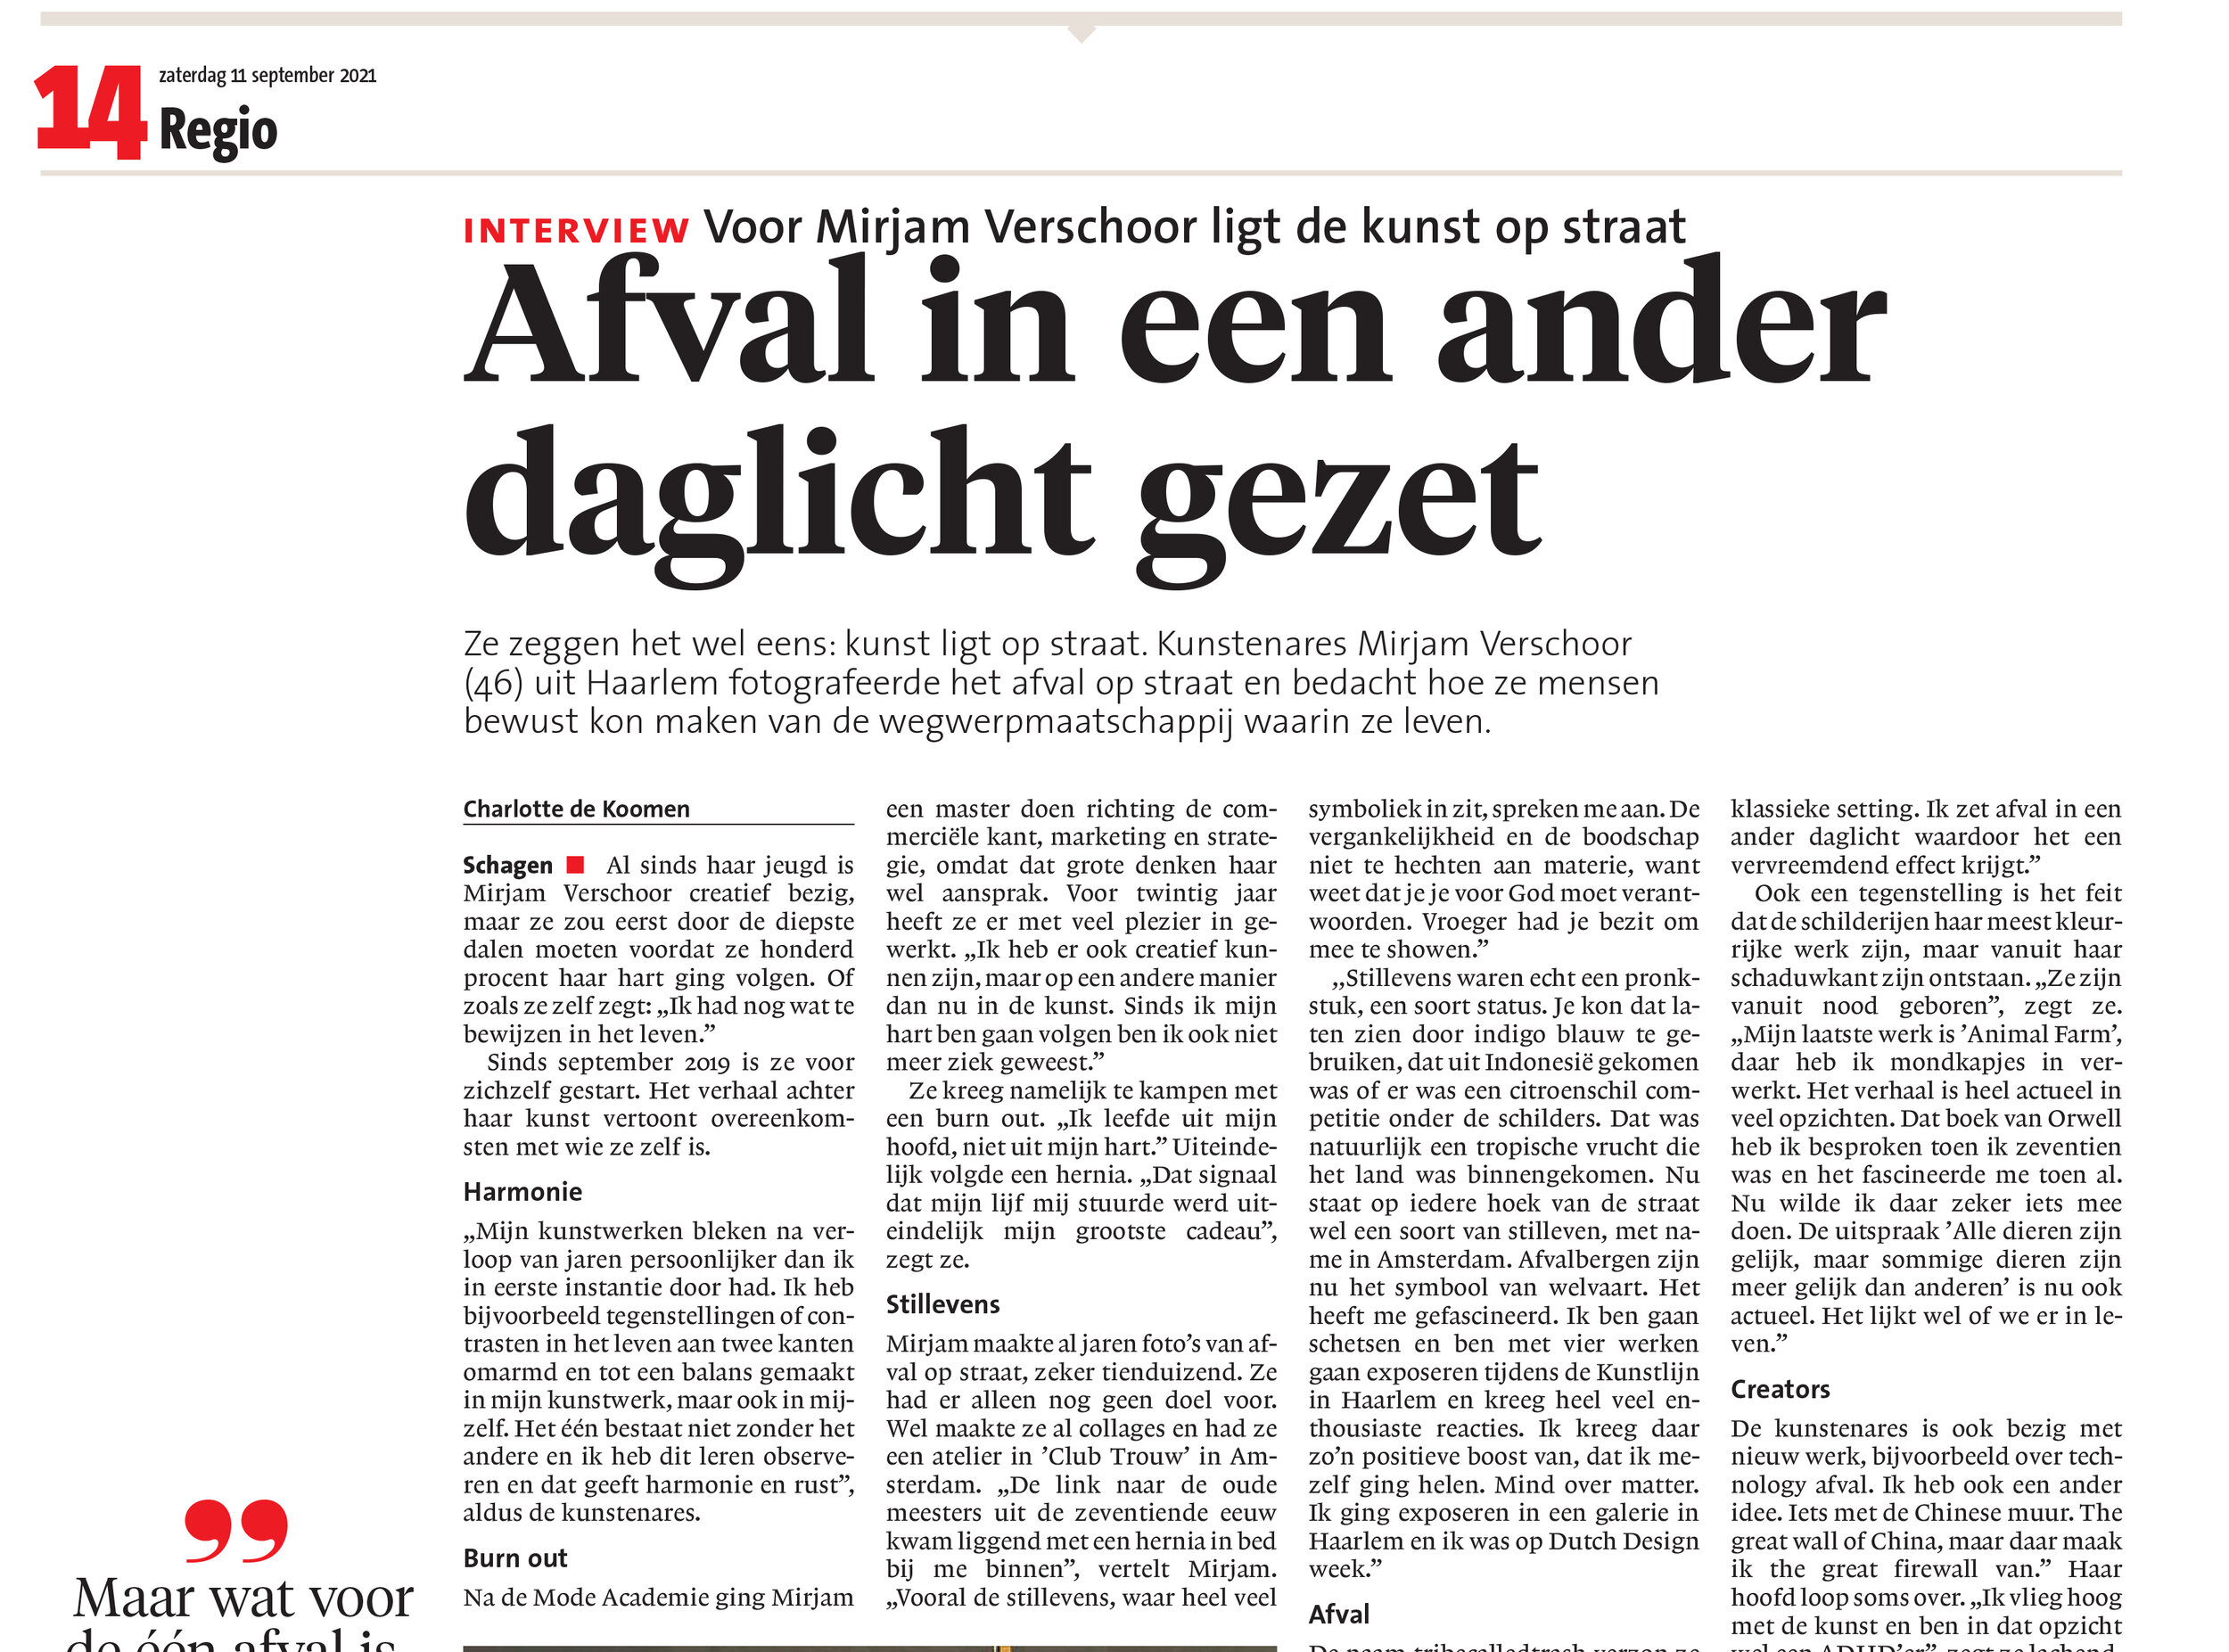 Noord Hollands Dagblad 2 copy.jpg